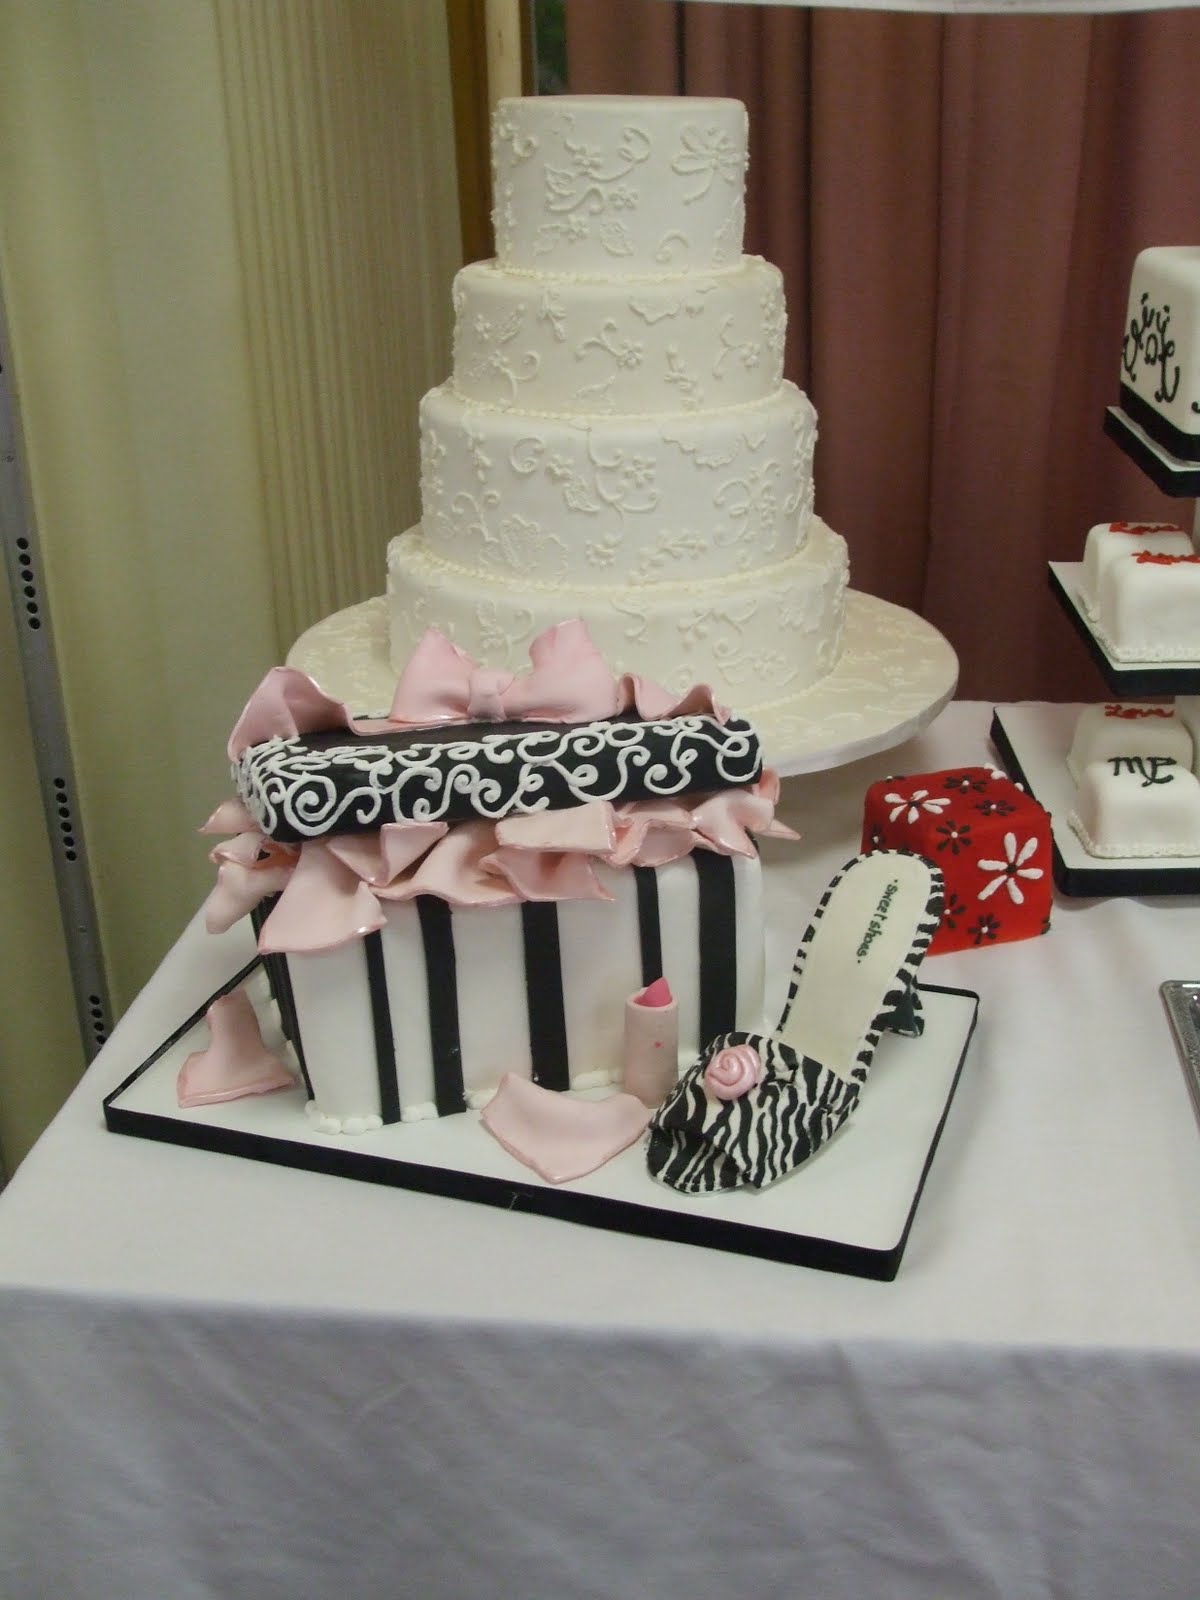 John+deere+cake+toppers+wedding+cakes